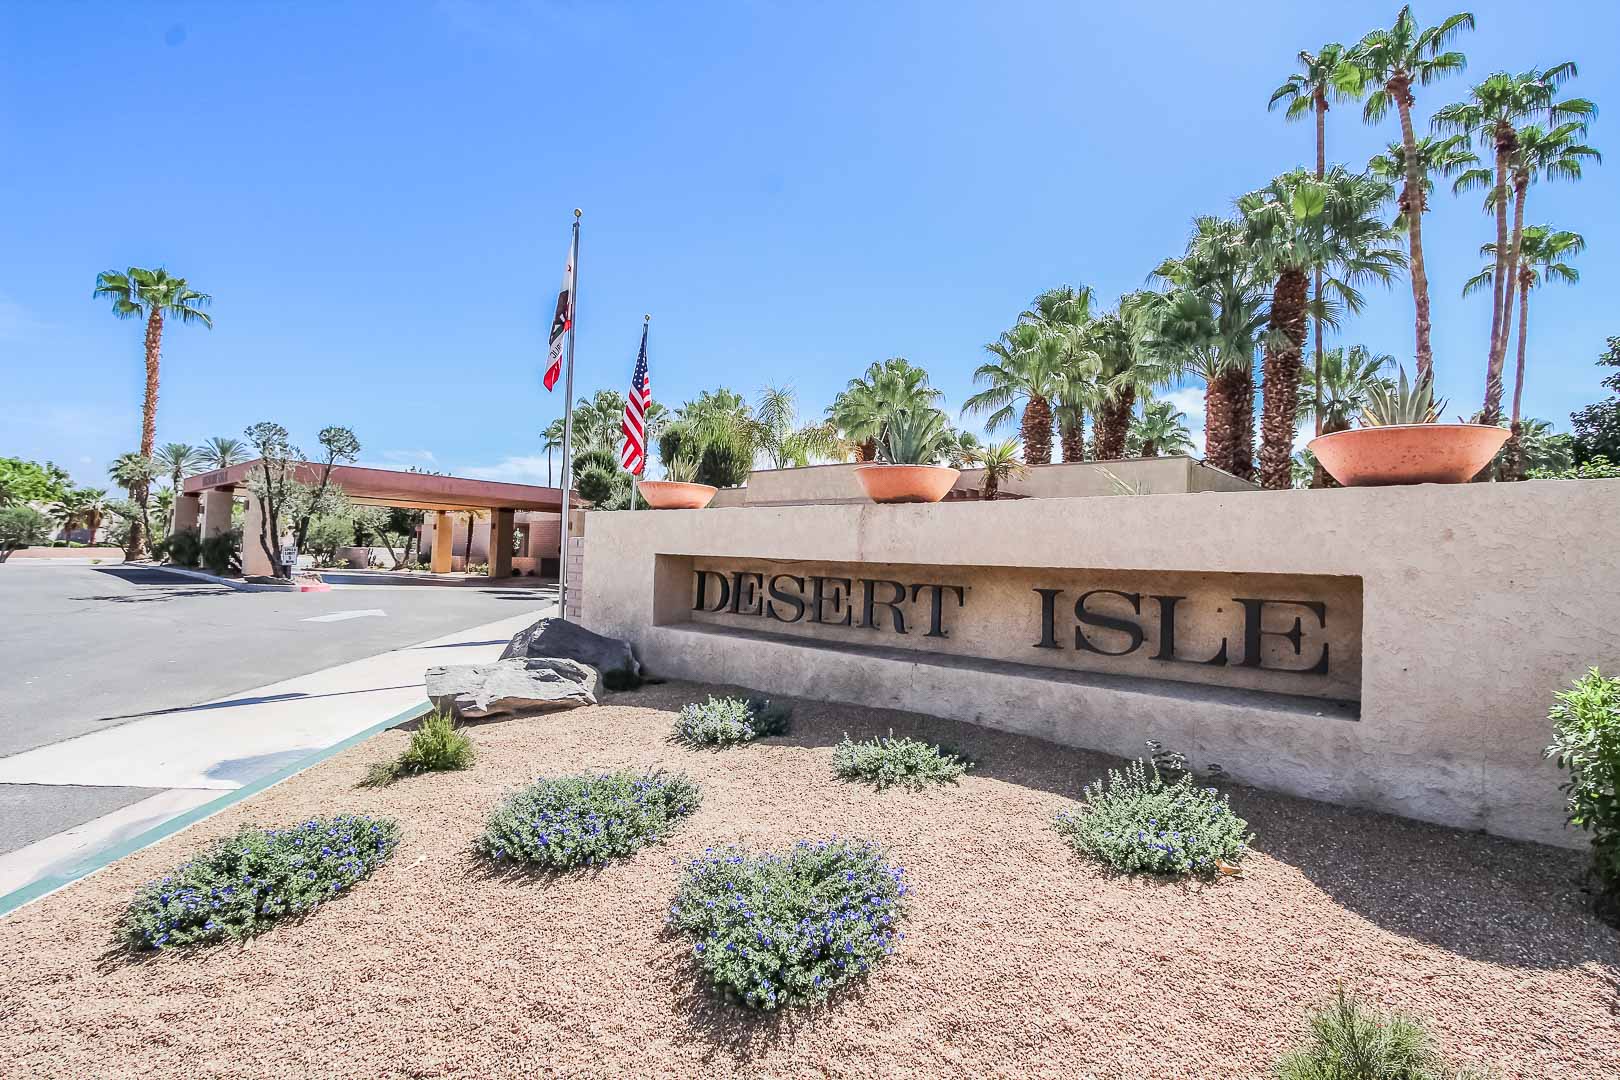 Sunny skies at VRI's Desert Isle Resort in California.